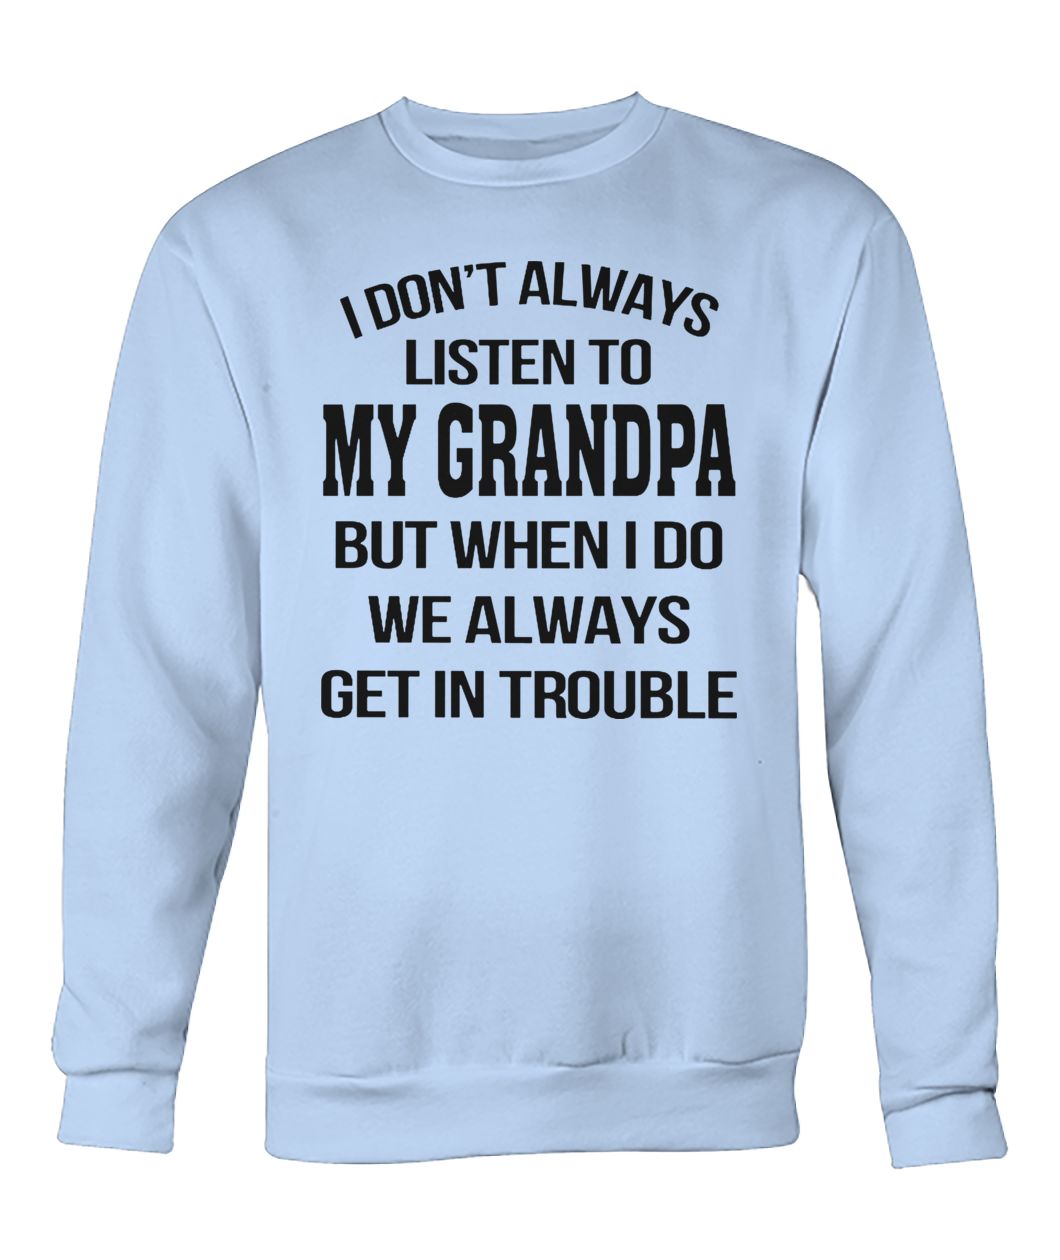 I don't always listen to my grandpa crew neck sweatshirt